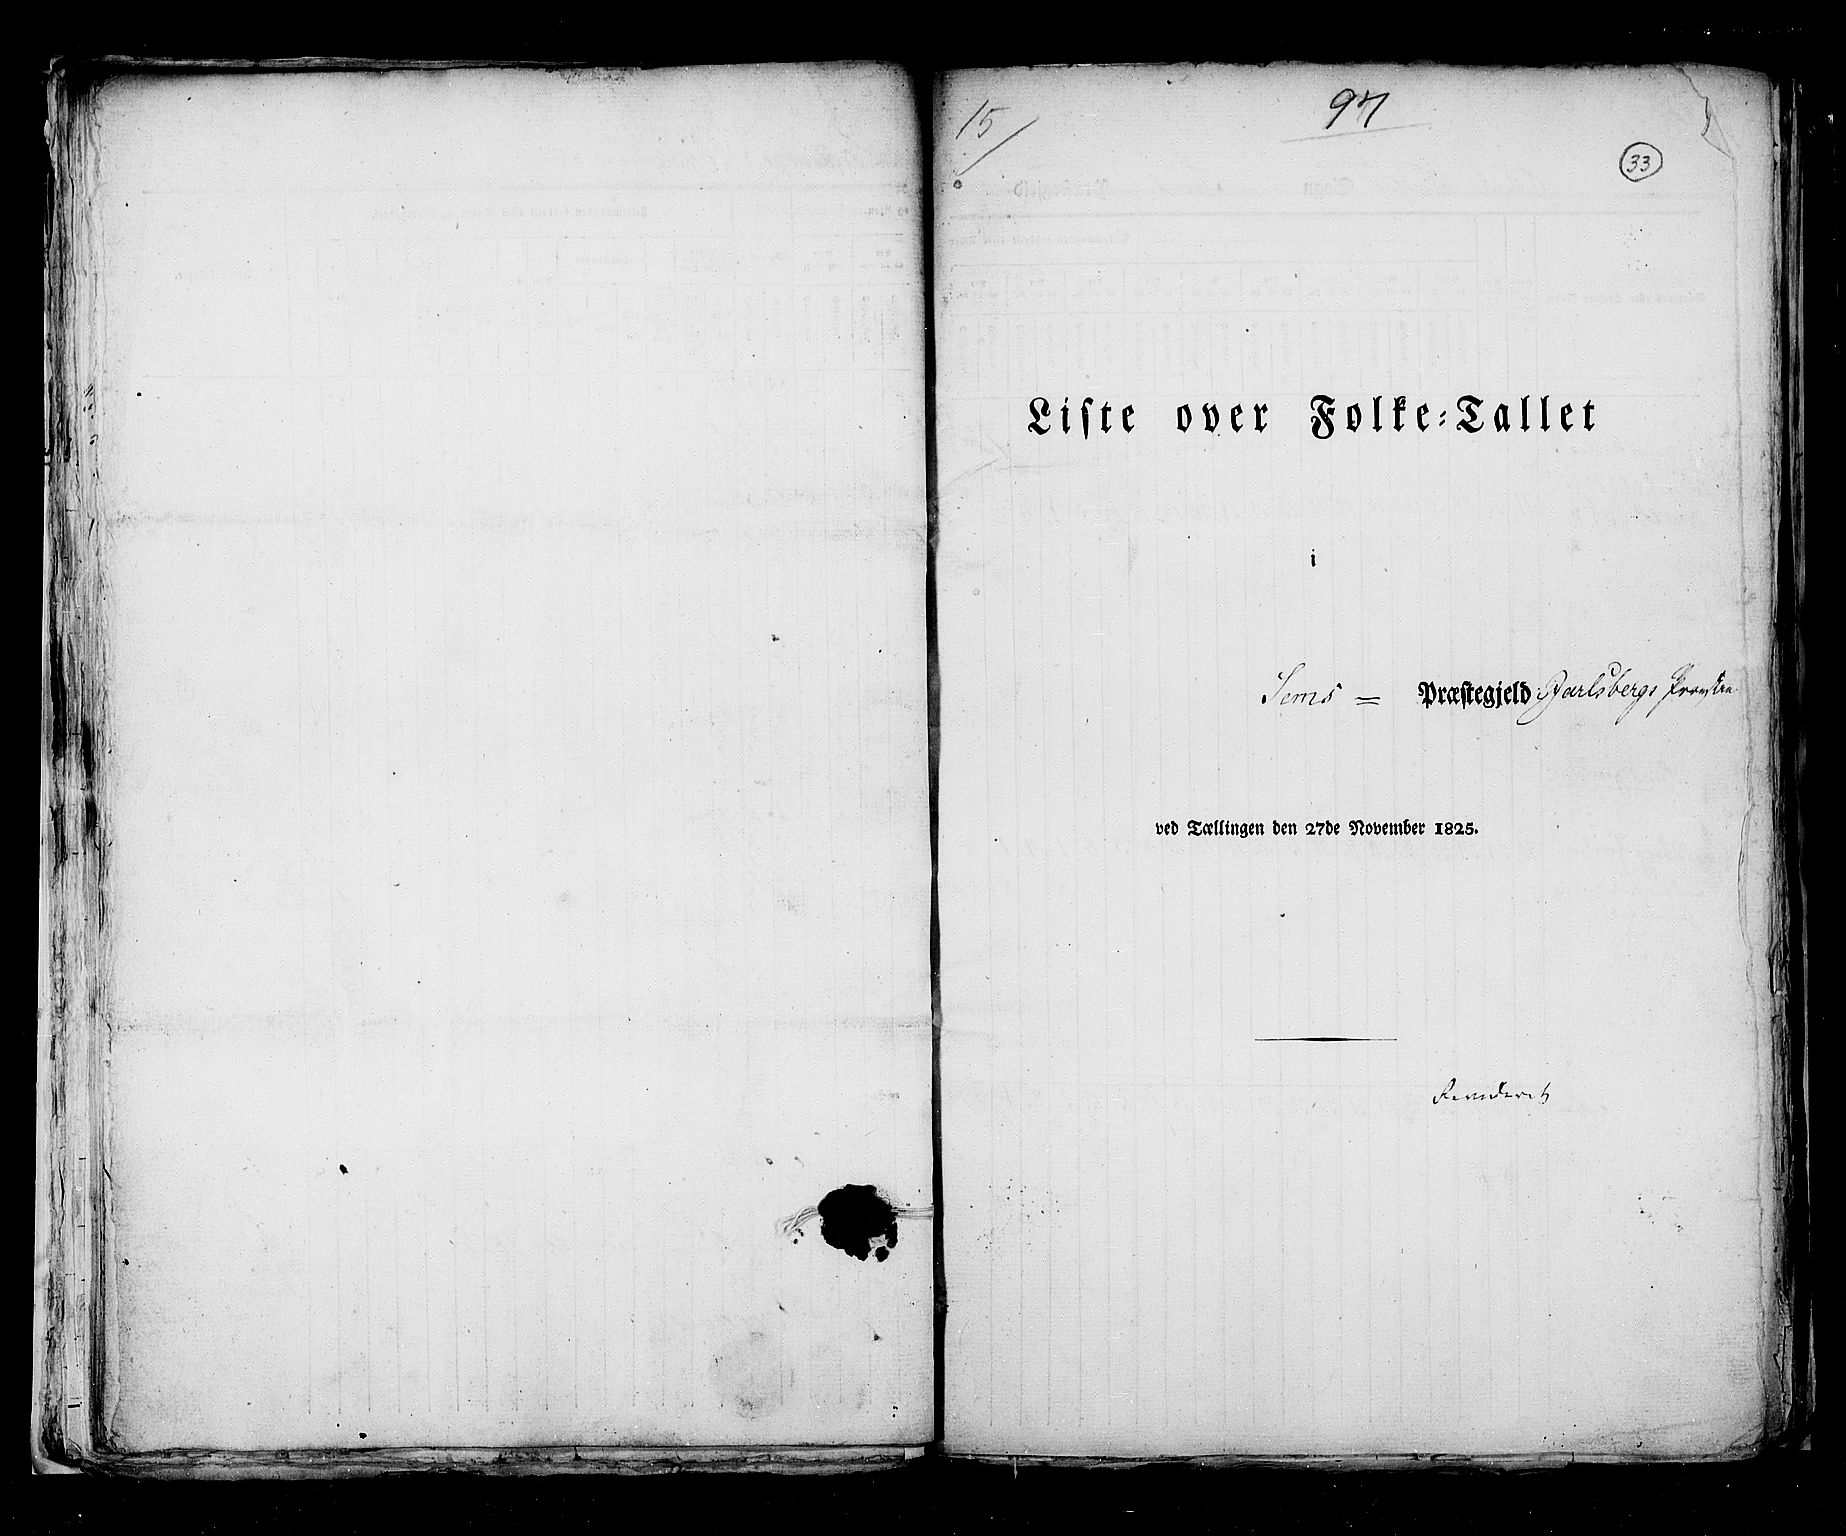 RA, Census 1825, vol. 8: Jarlsberg og Larvik amt, 1825, p. 33